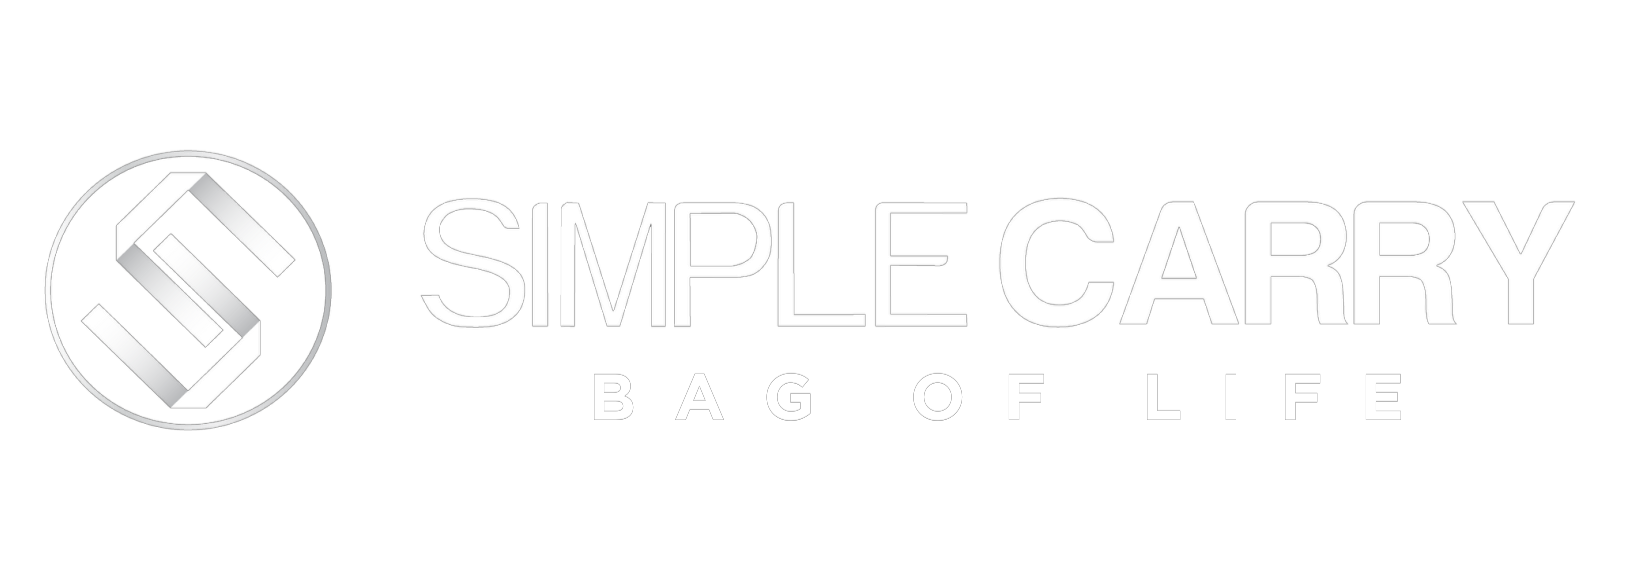 SimpleCarry - BAG OF LIFE